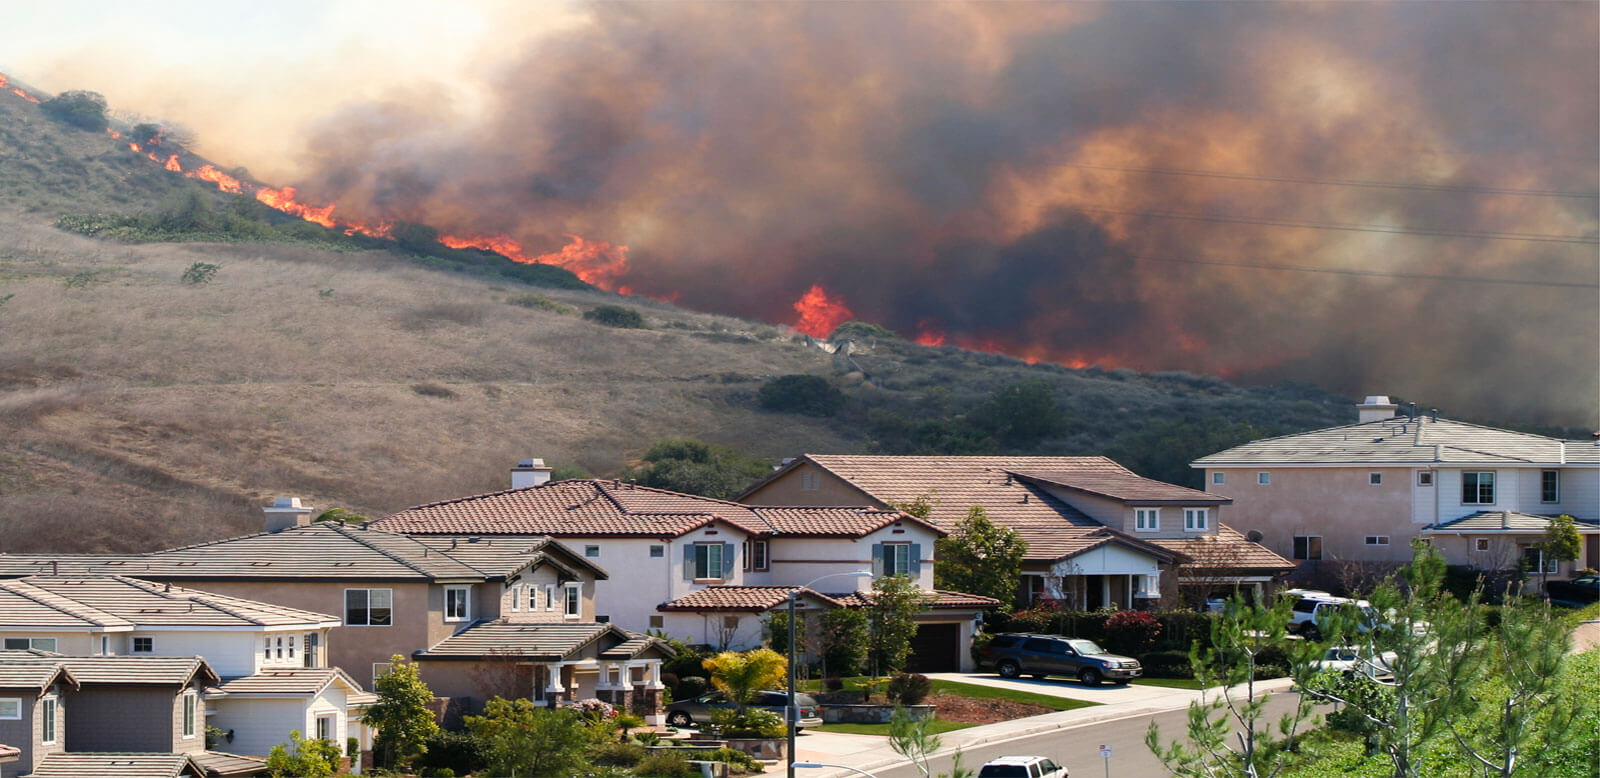 wildfire burning through neighborhood homes